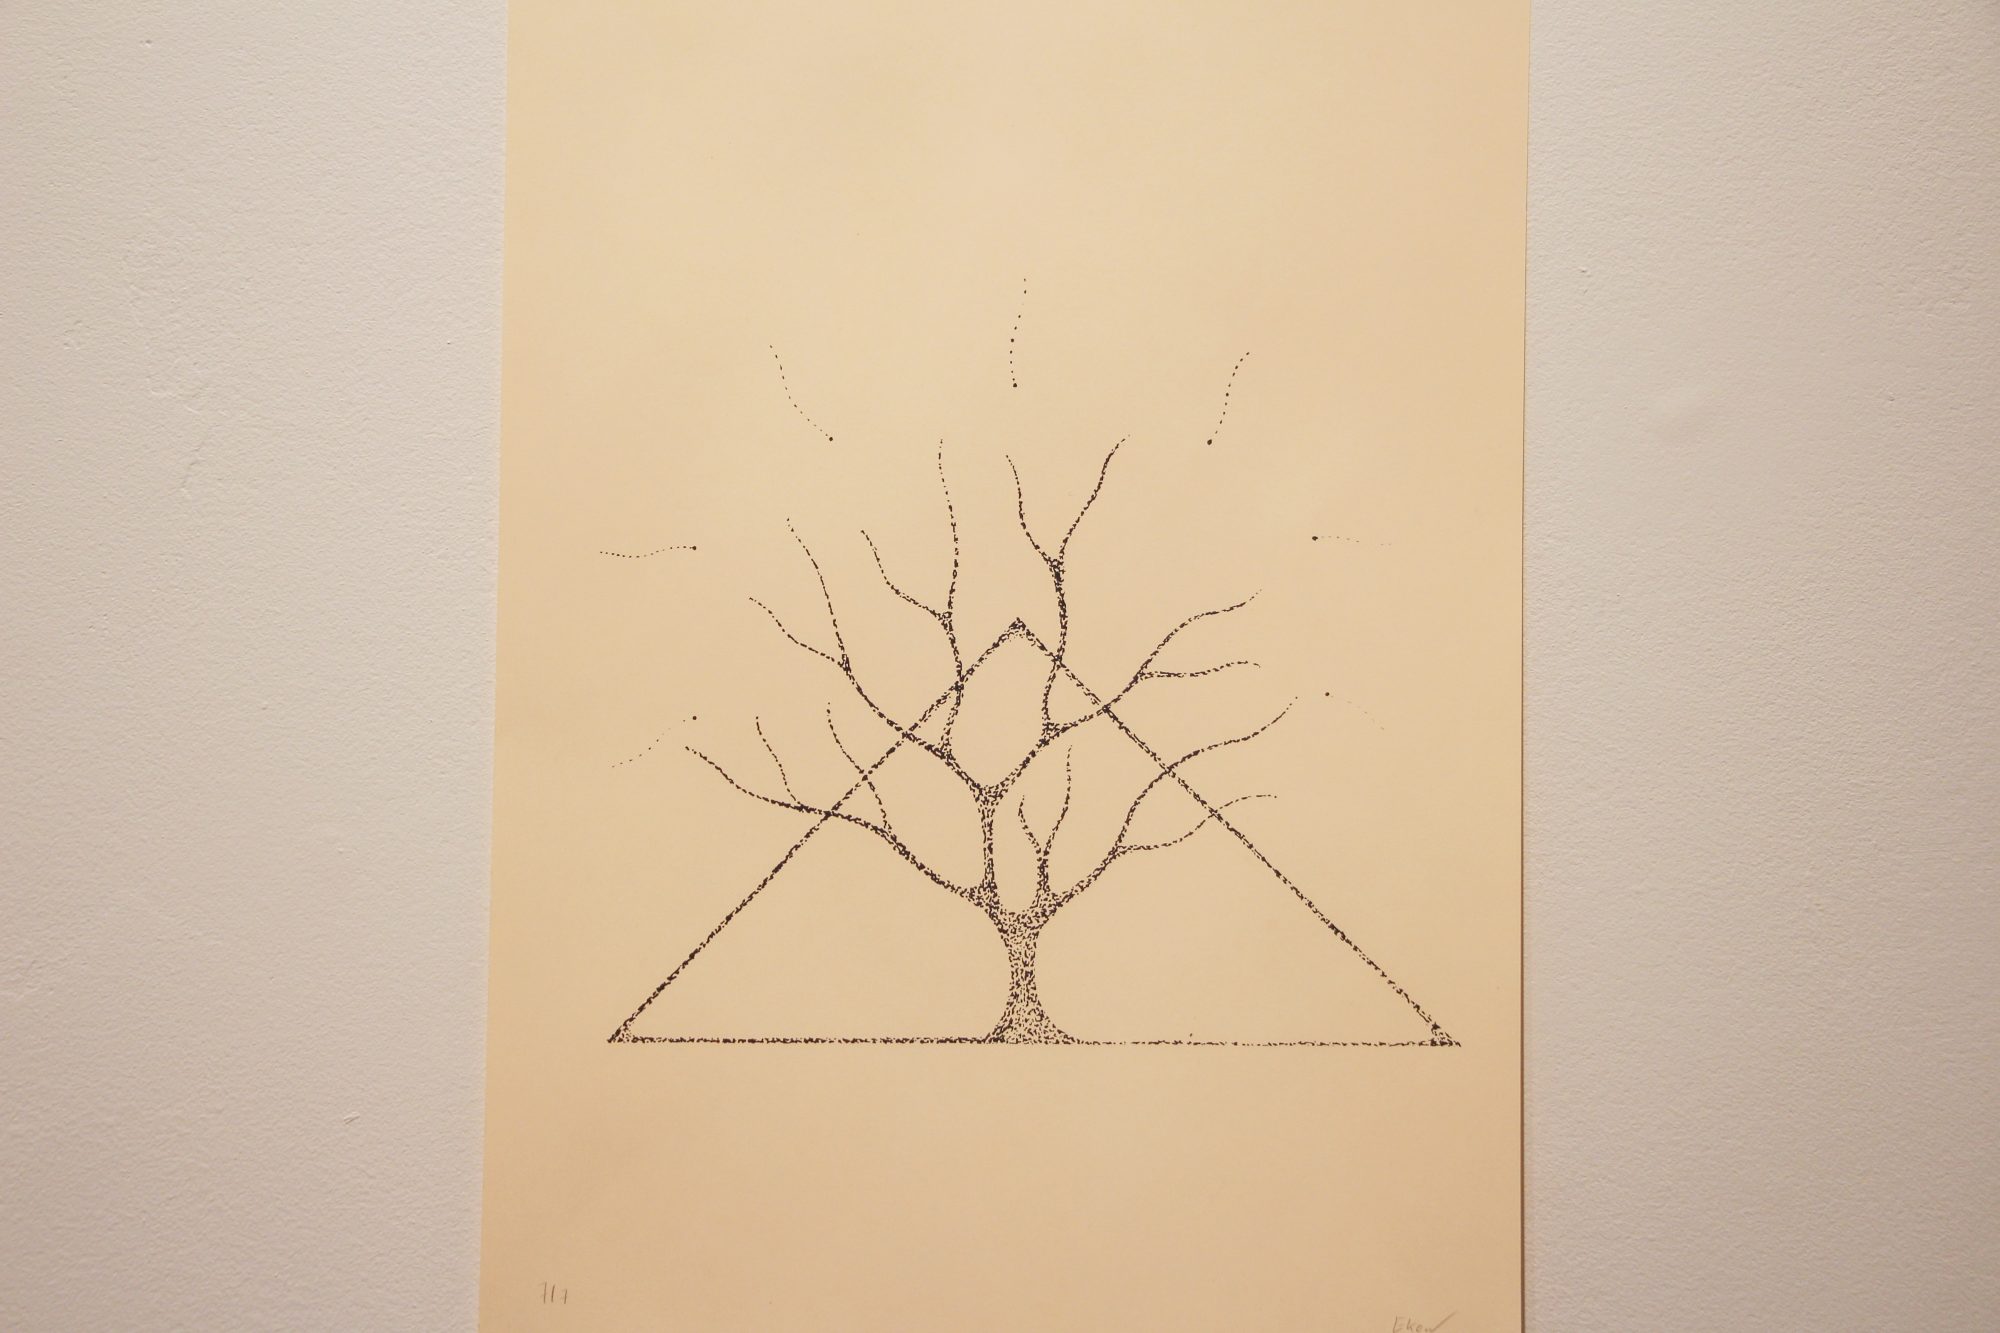 Ekow Stone, "Tree in Pyramid."